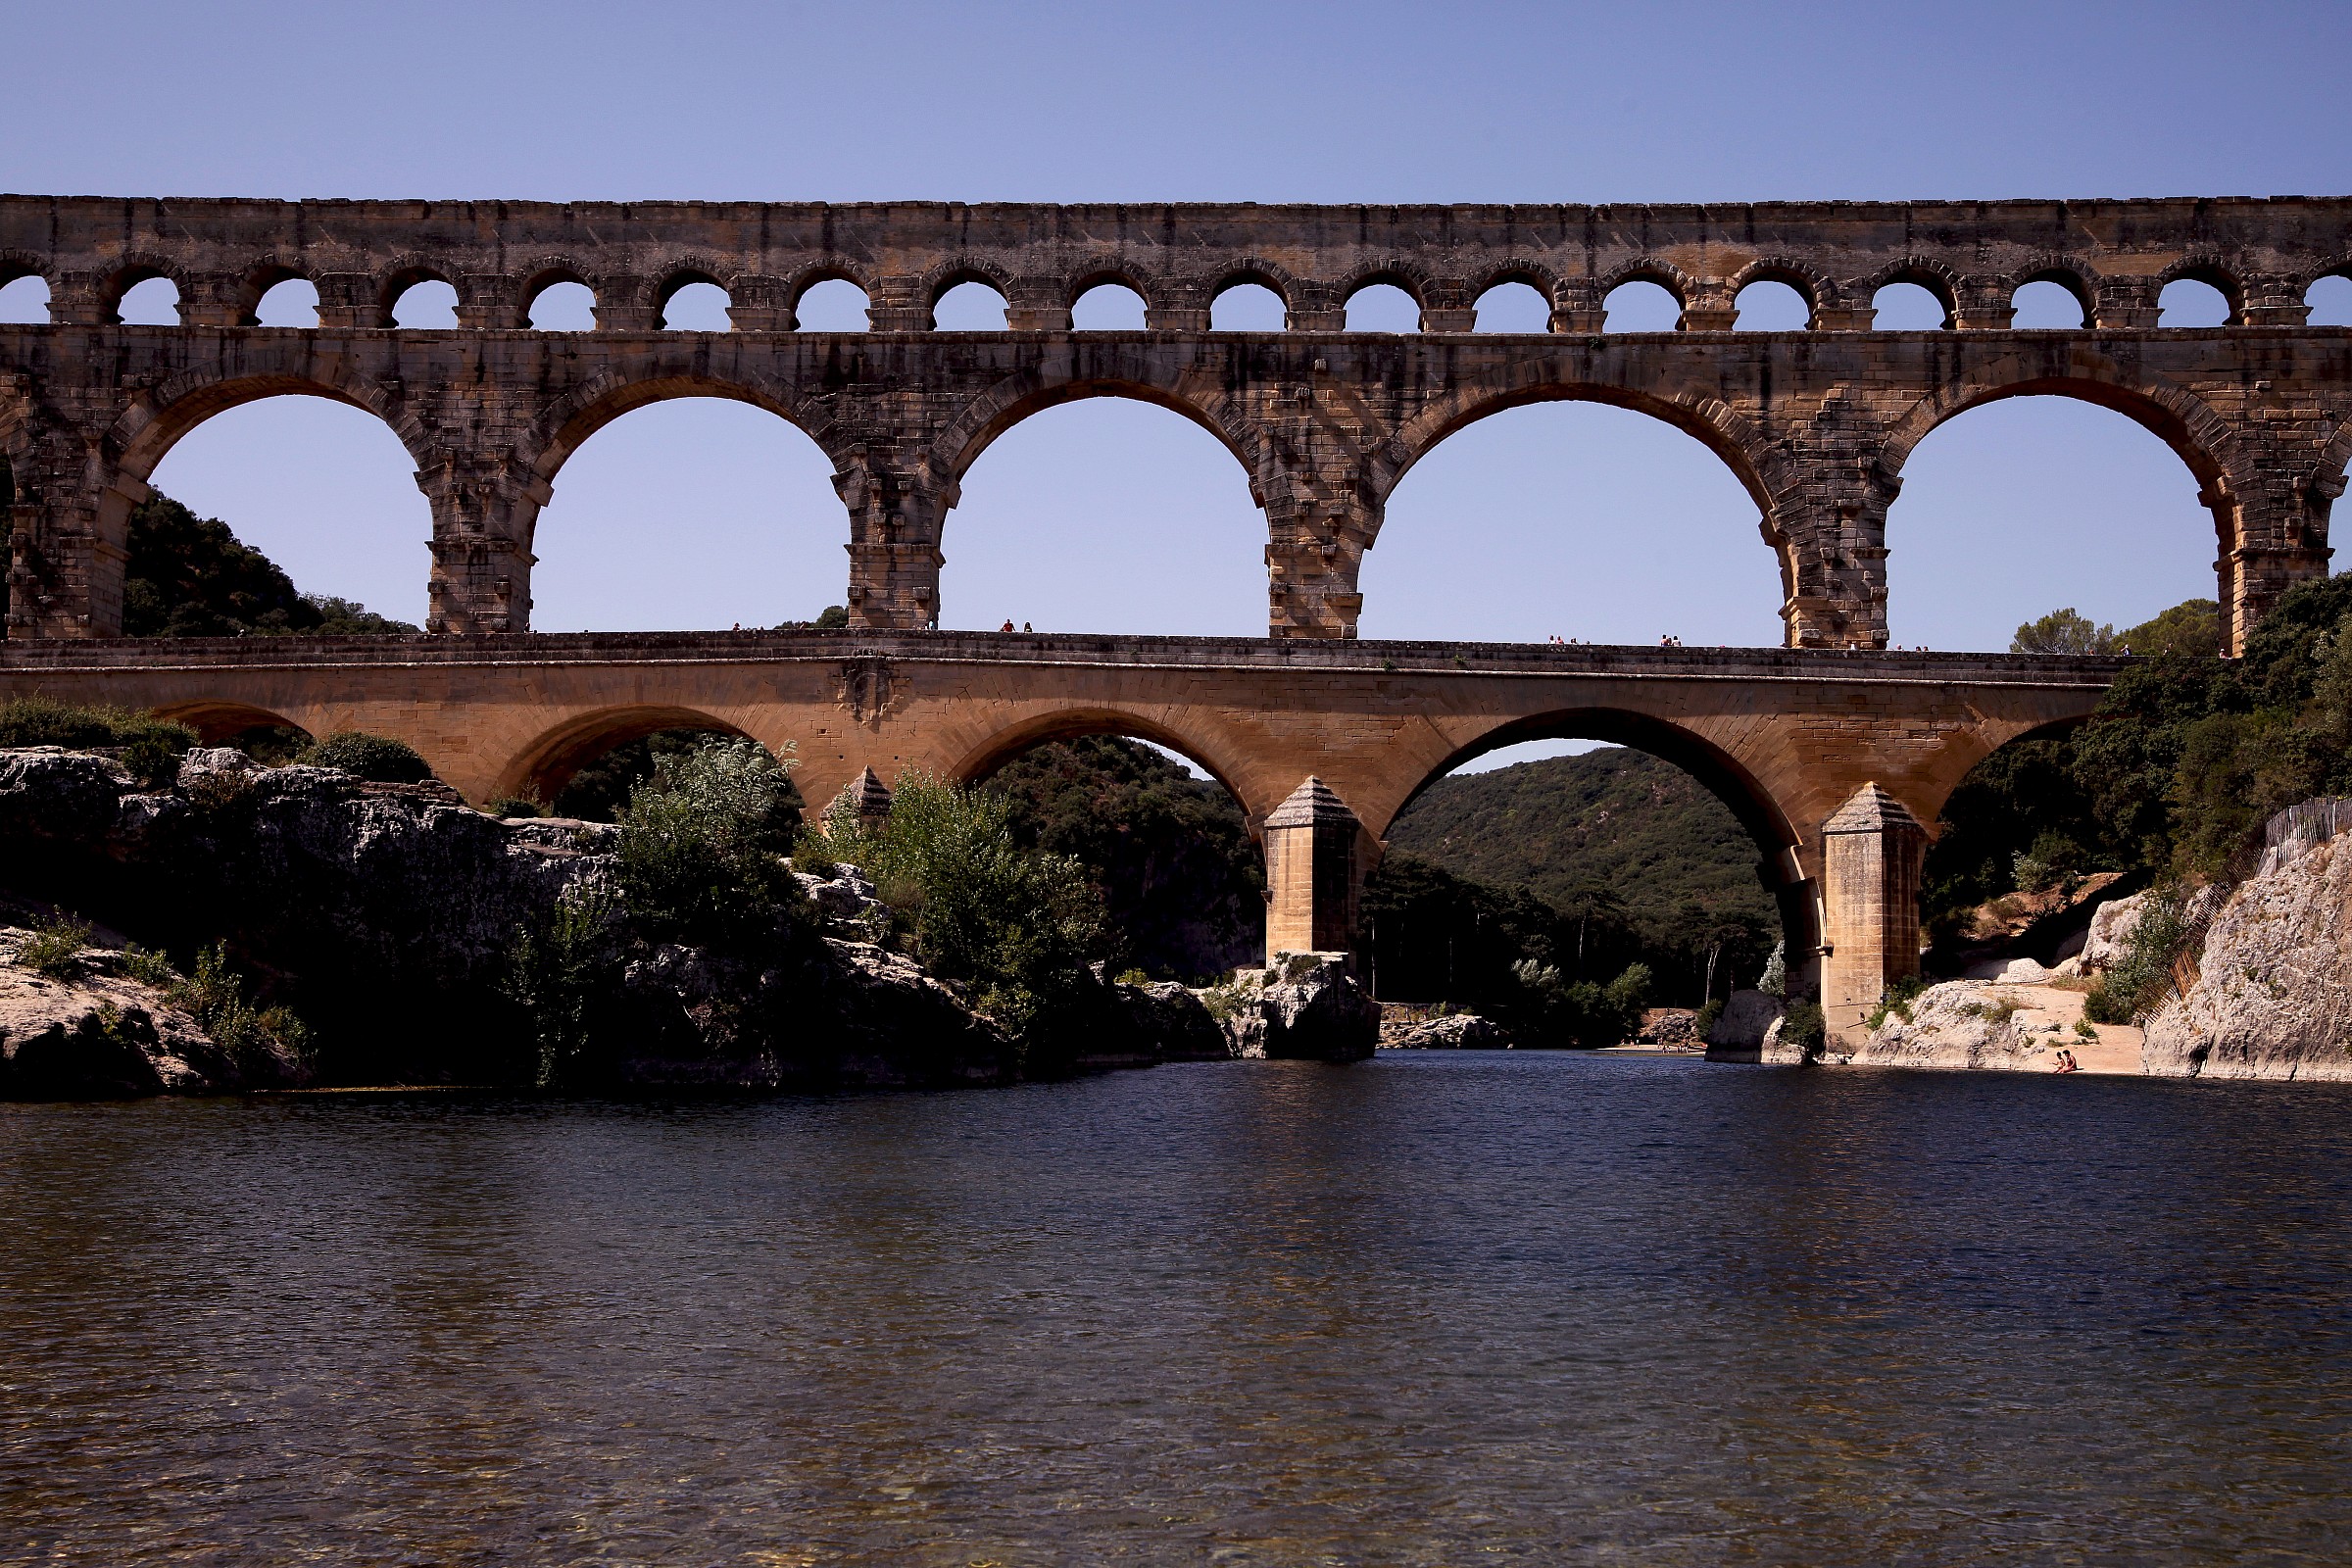 Pont du Gard...